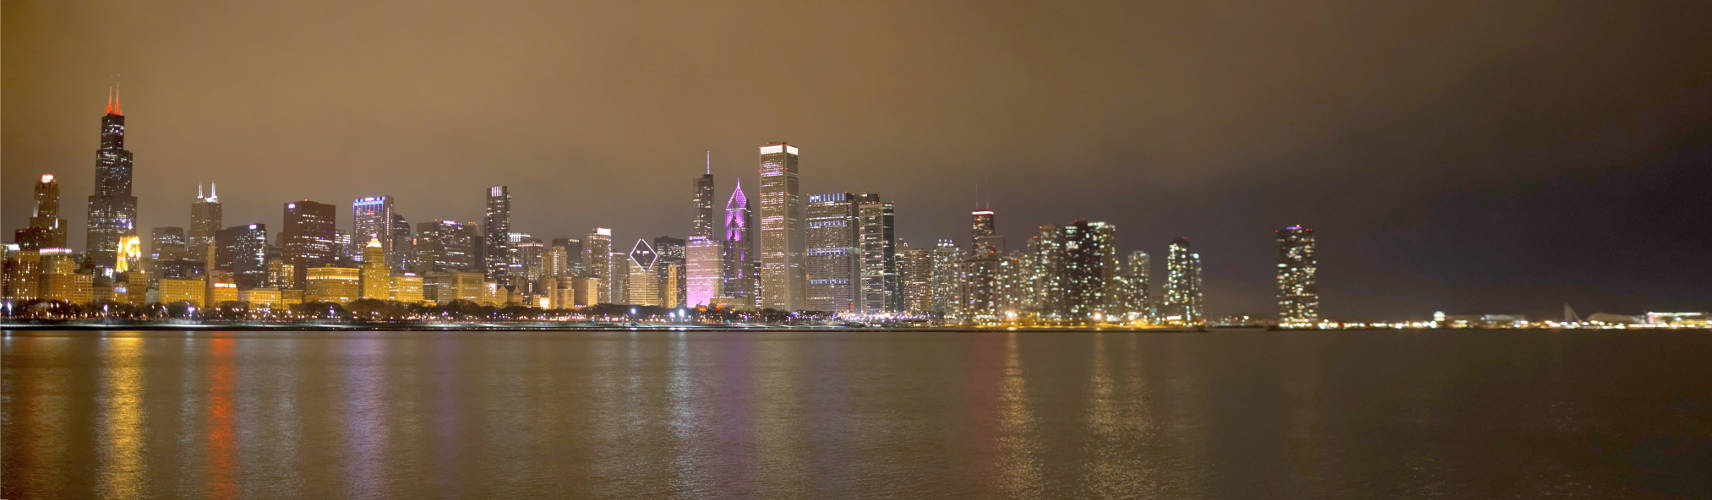 Panorama de Chicago la nuit